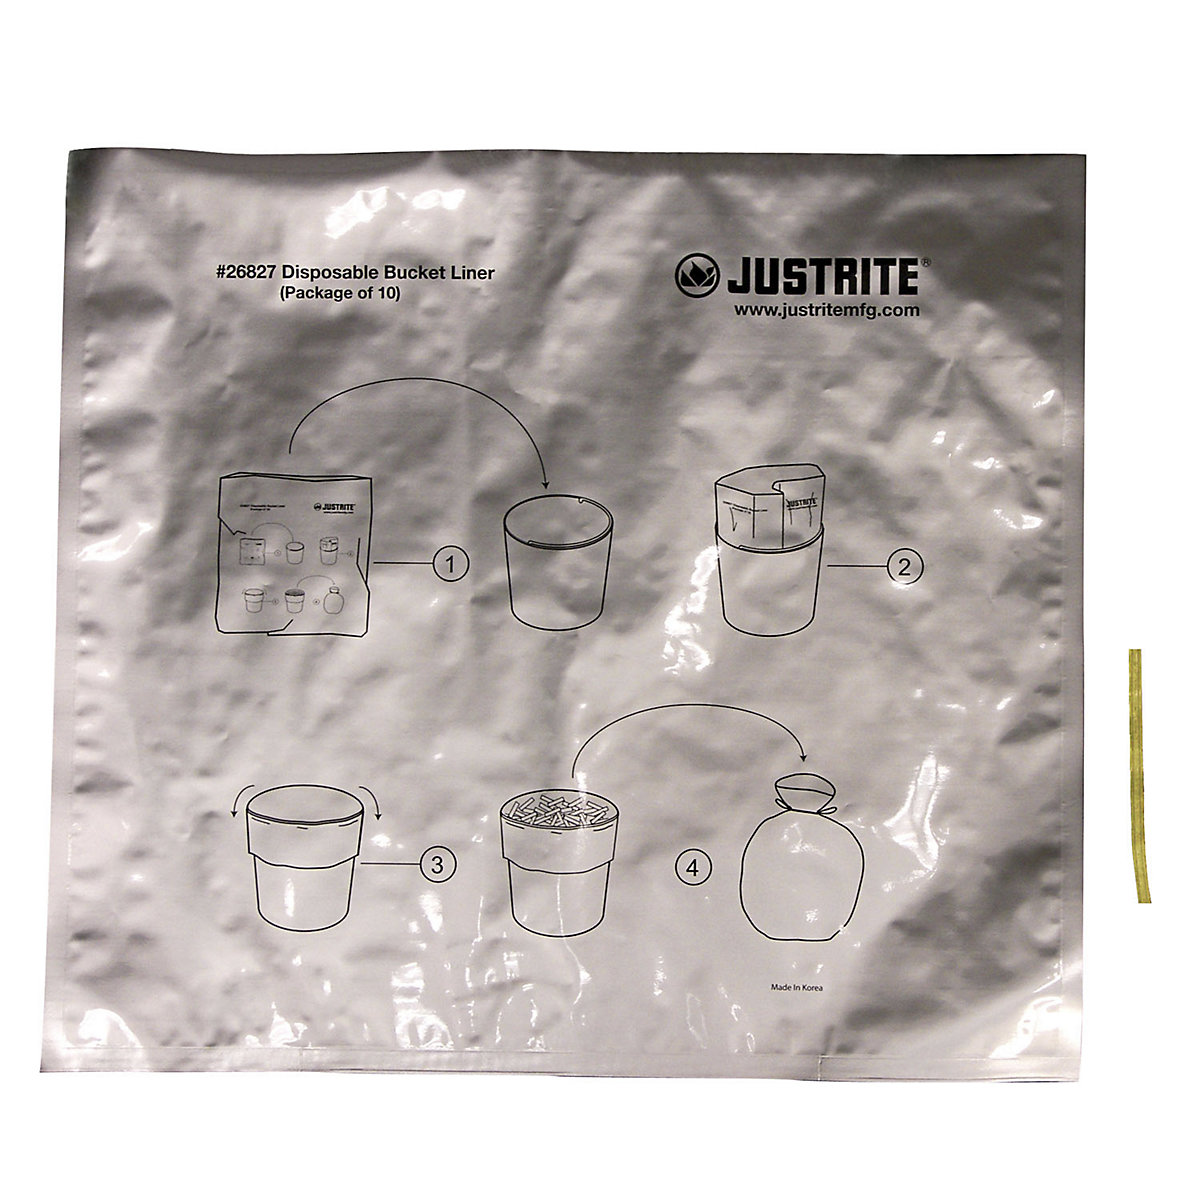 Special aluminium waste sacks for pedestal ashtrays – Justrite